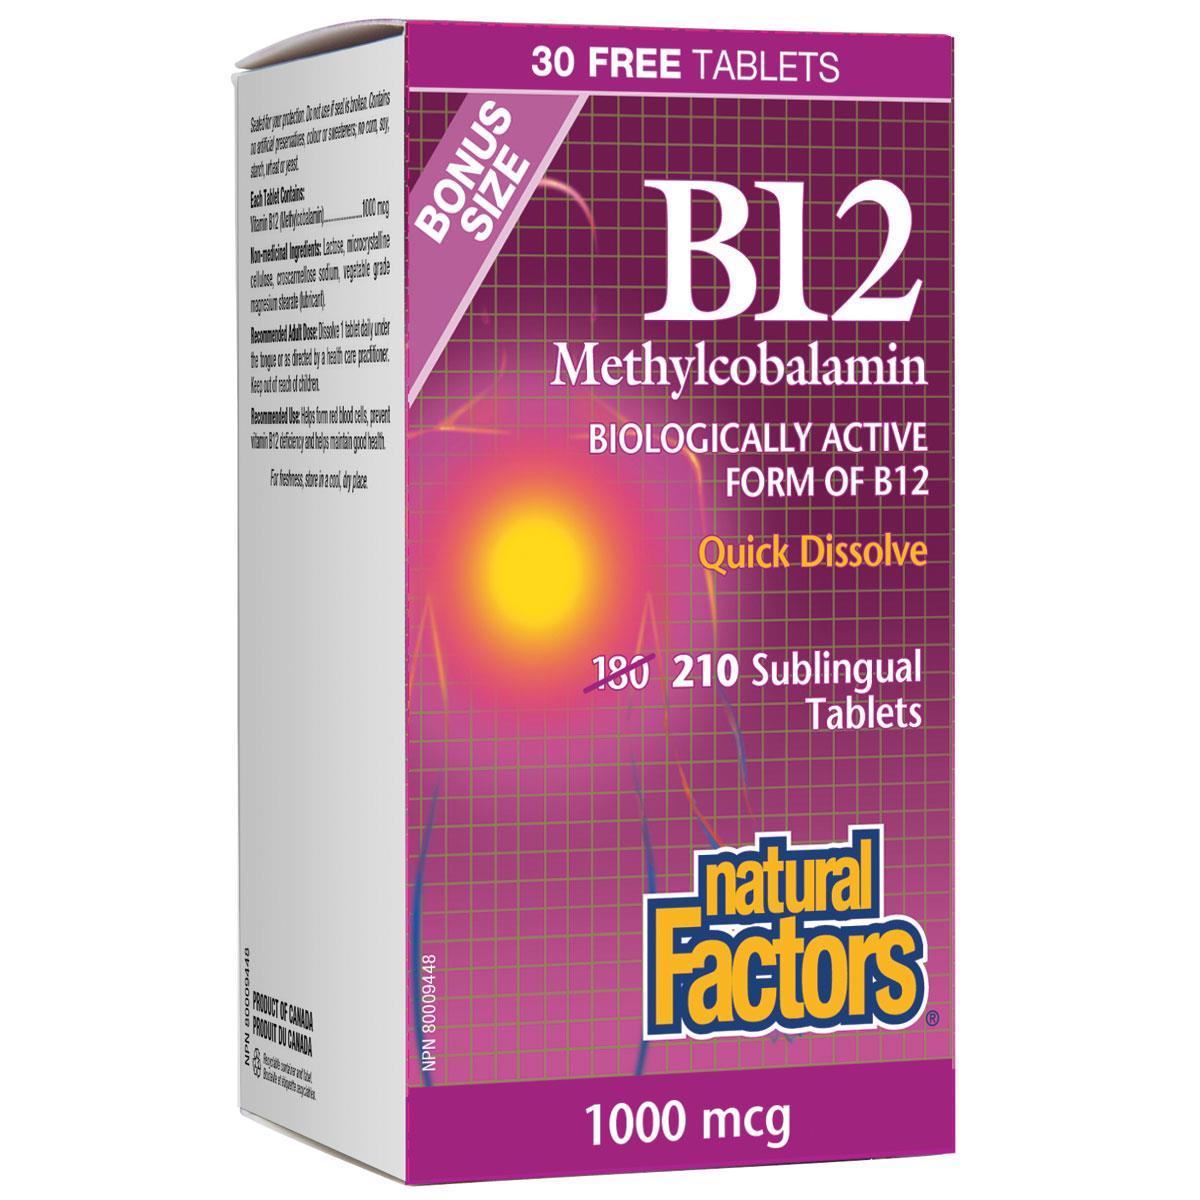 Natural Factors B12 Methylcobalamin, 1000mcg, Quick Dissolve 210 tablets